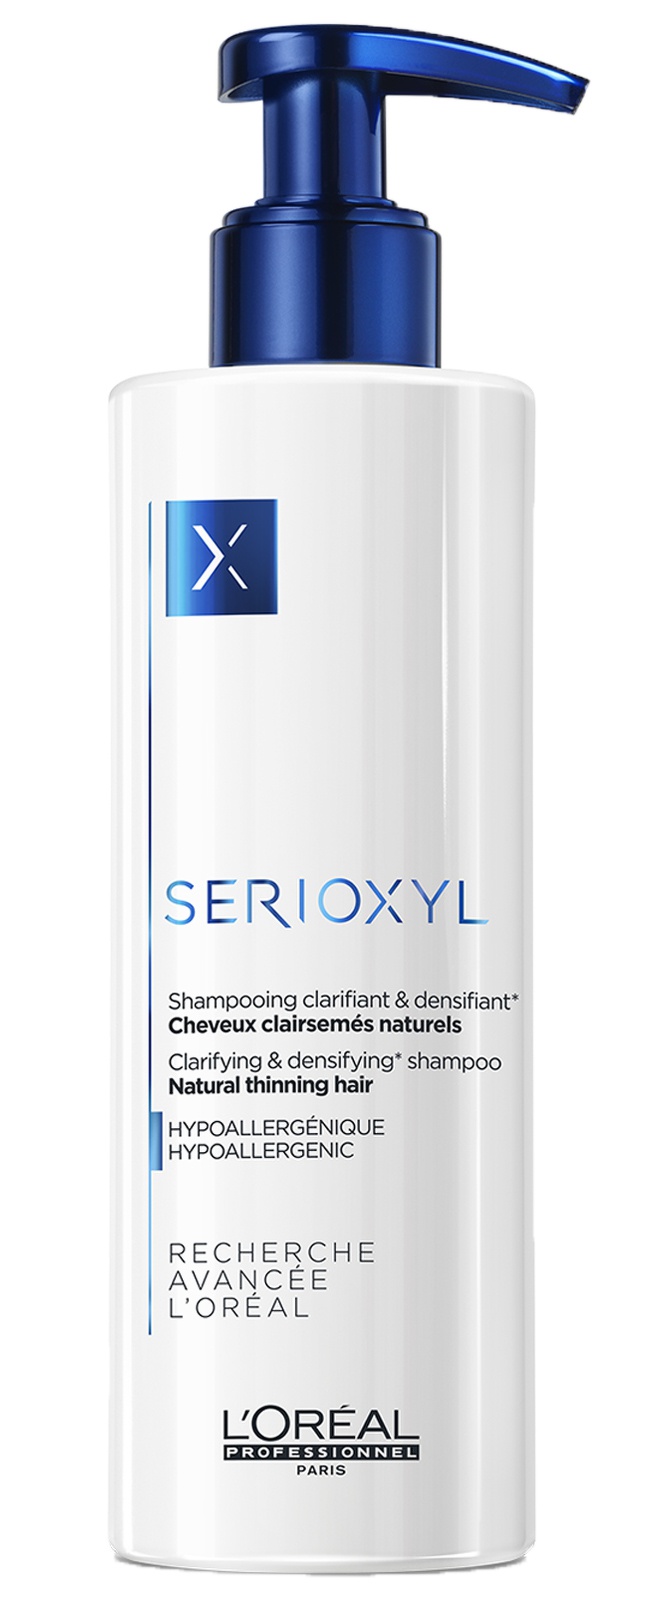 L'Oreal Professionnel Serioxyl Clarifying & Densifying Shampoo